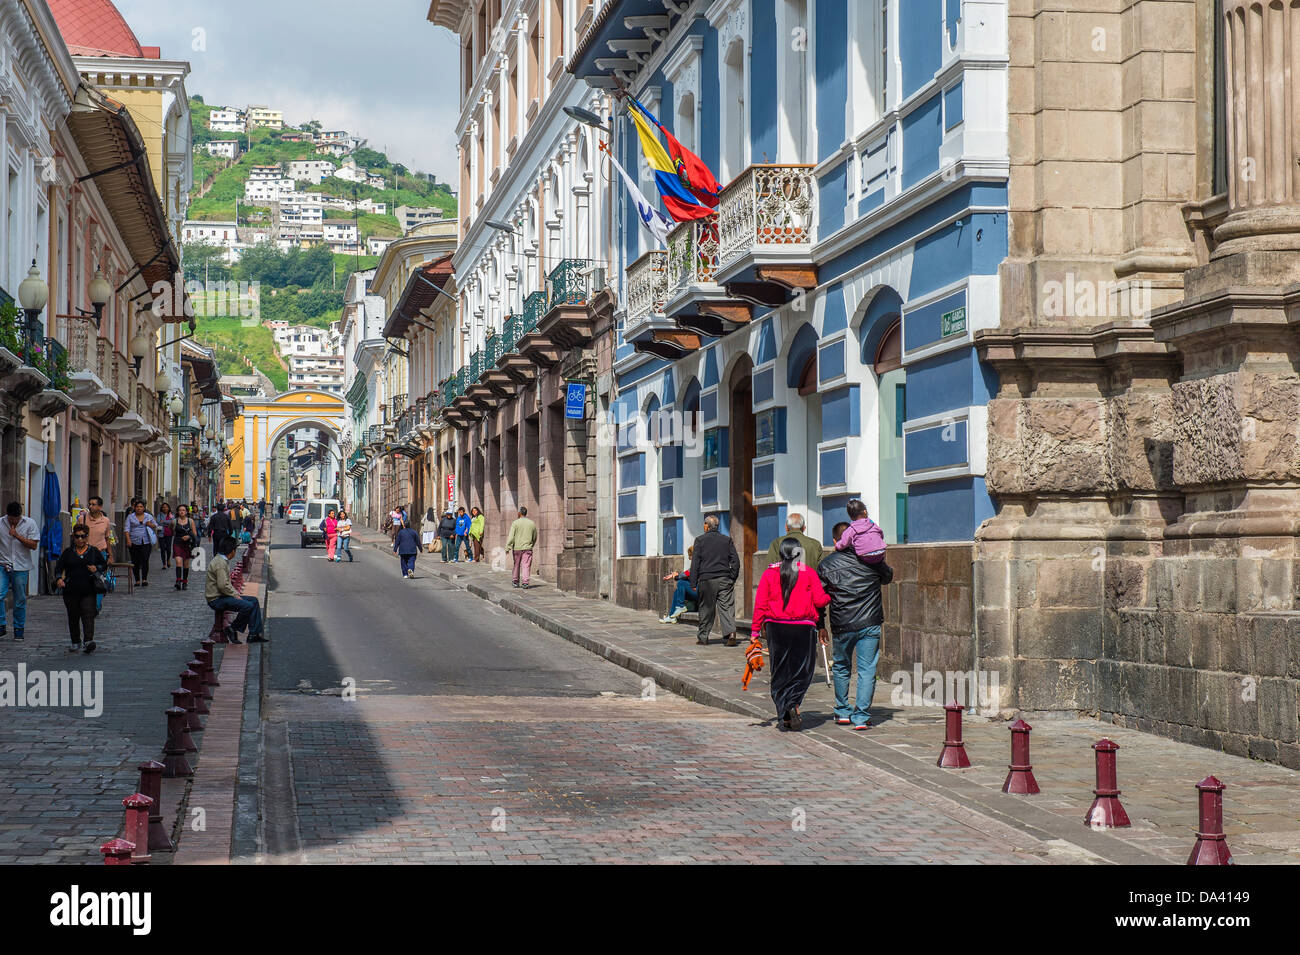 Garcia Moreno, rue du centre historique de Quito, Équateur, la province de Pichincha Banque D'Images